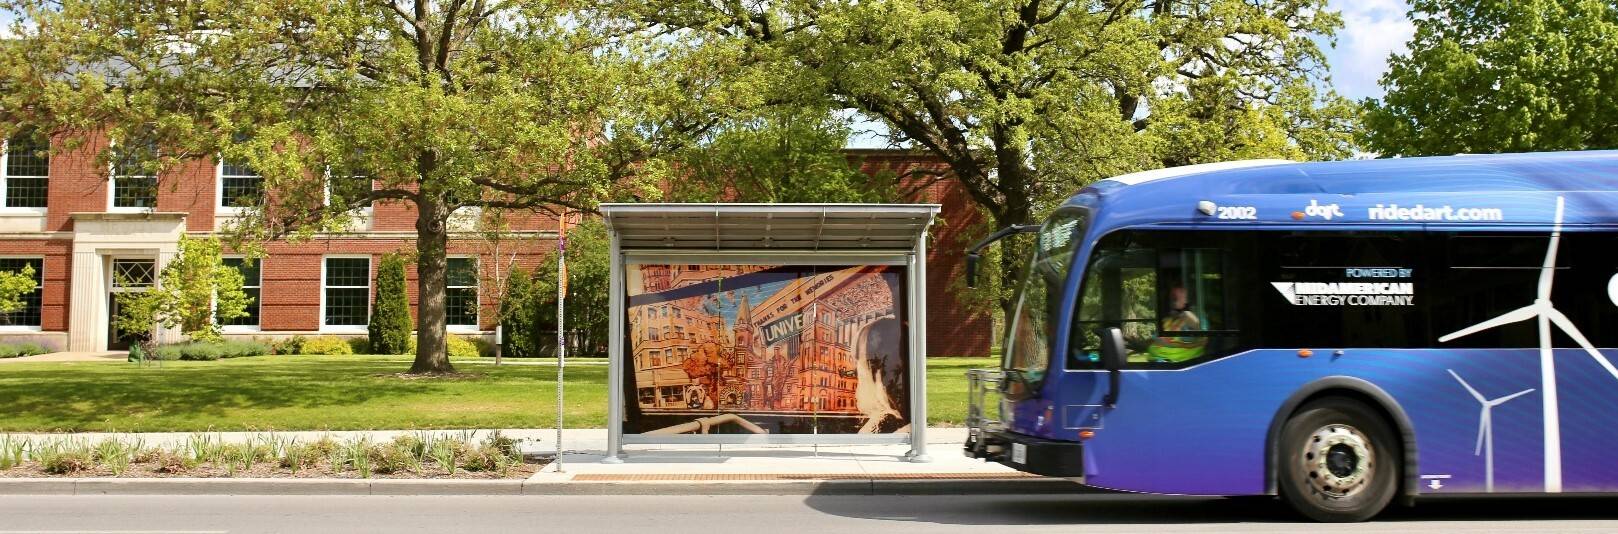 An electric bus passes an art bus shelter at Drake University.